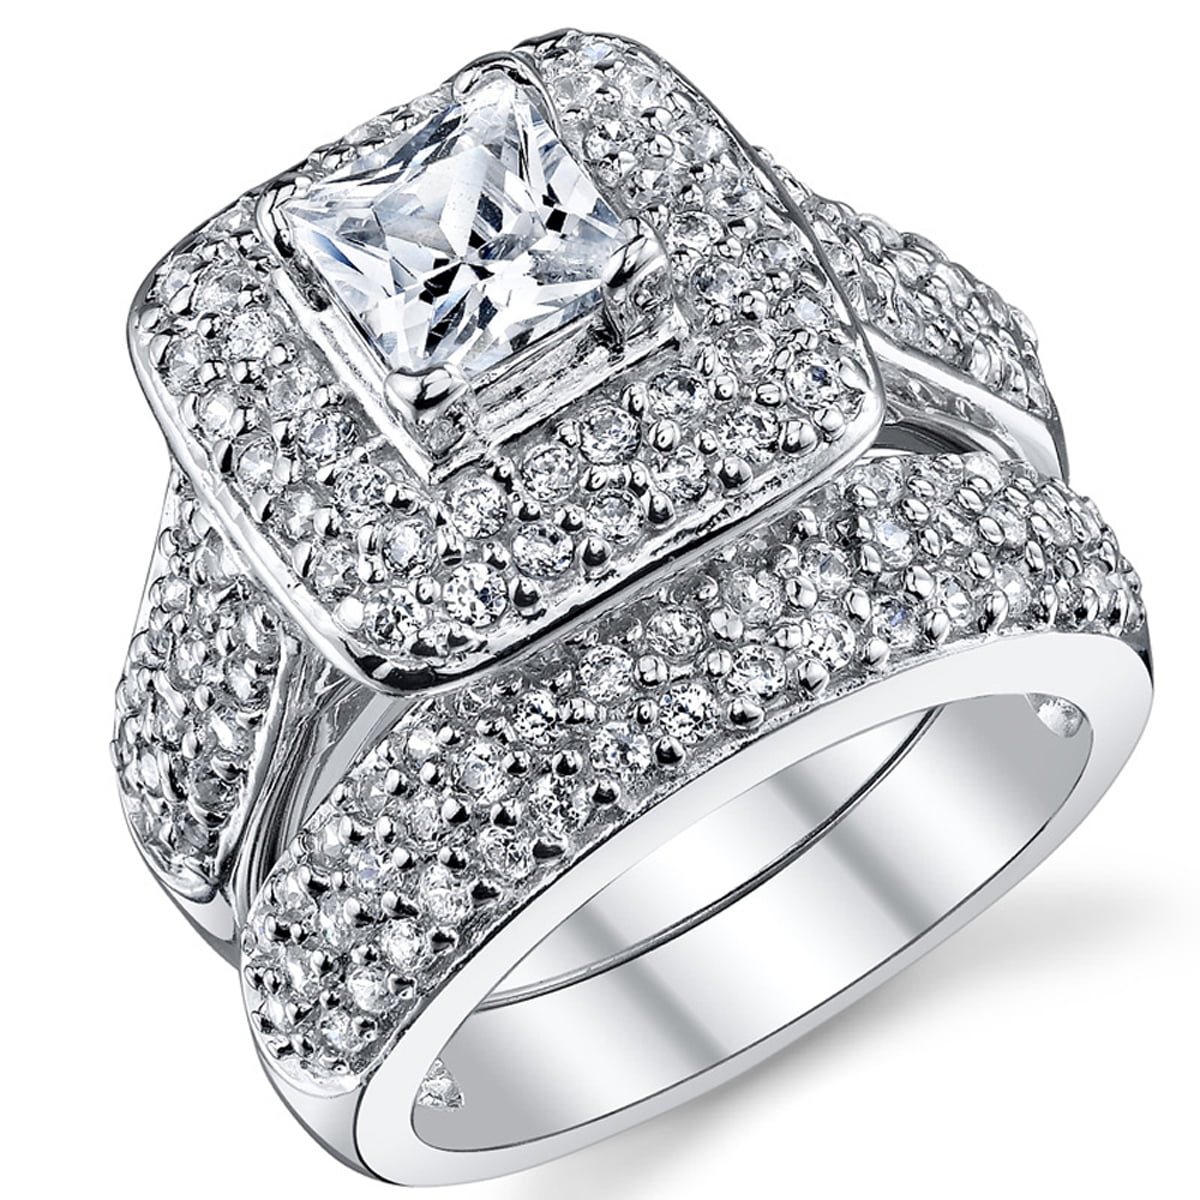 Wuziwen Womens Engagement Rings Wedding Ring Set 925 Sterling Silver Princess White Cz Size 5-12